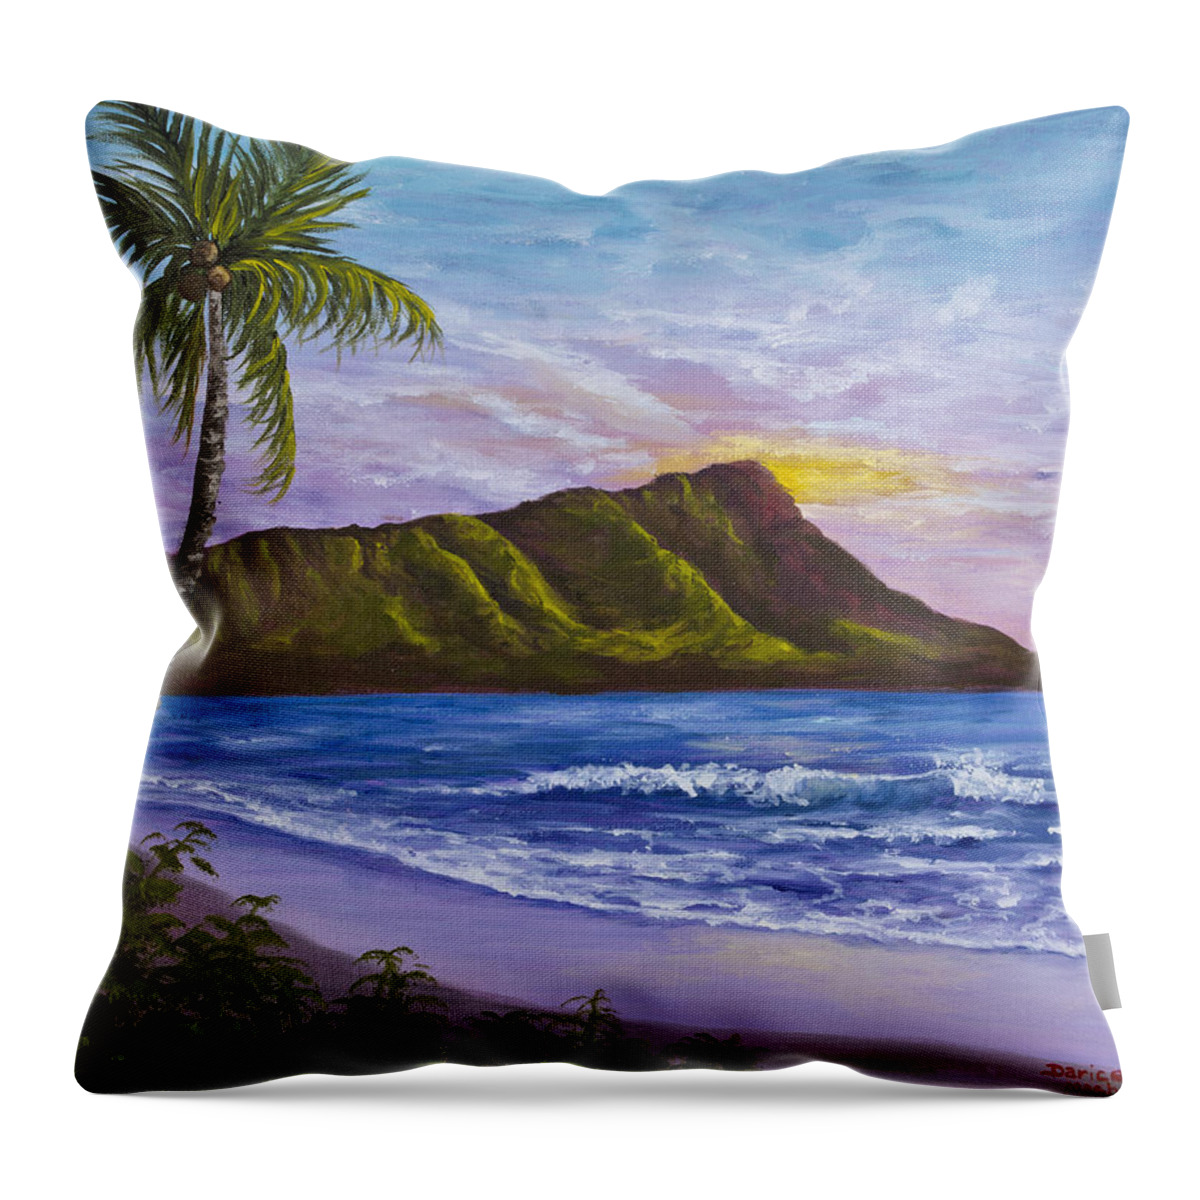 Hawaii Throw Pillow featuring the painting Diamond Head by Darice Machel McGuire